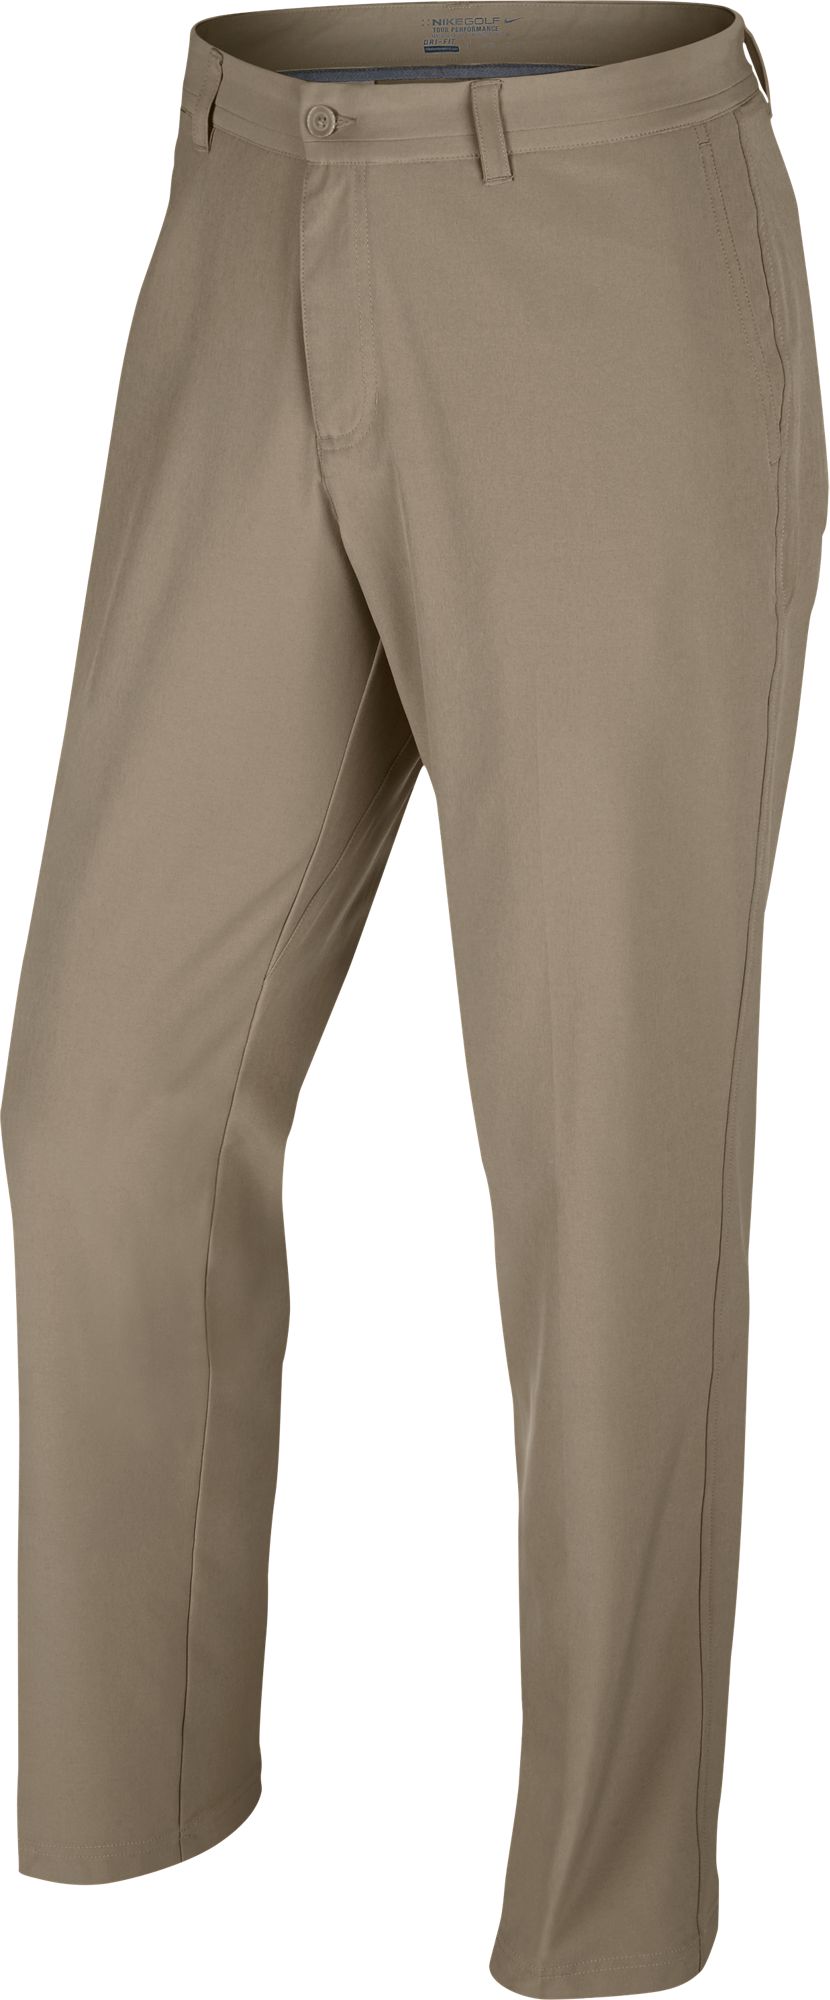 Golf Pants | DICK'S Sporting Goods